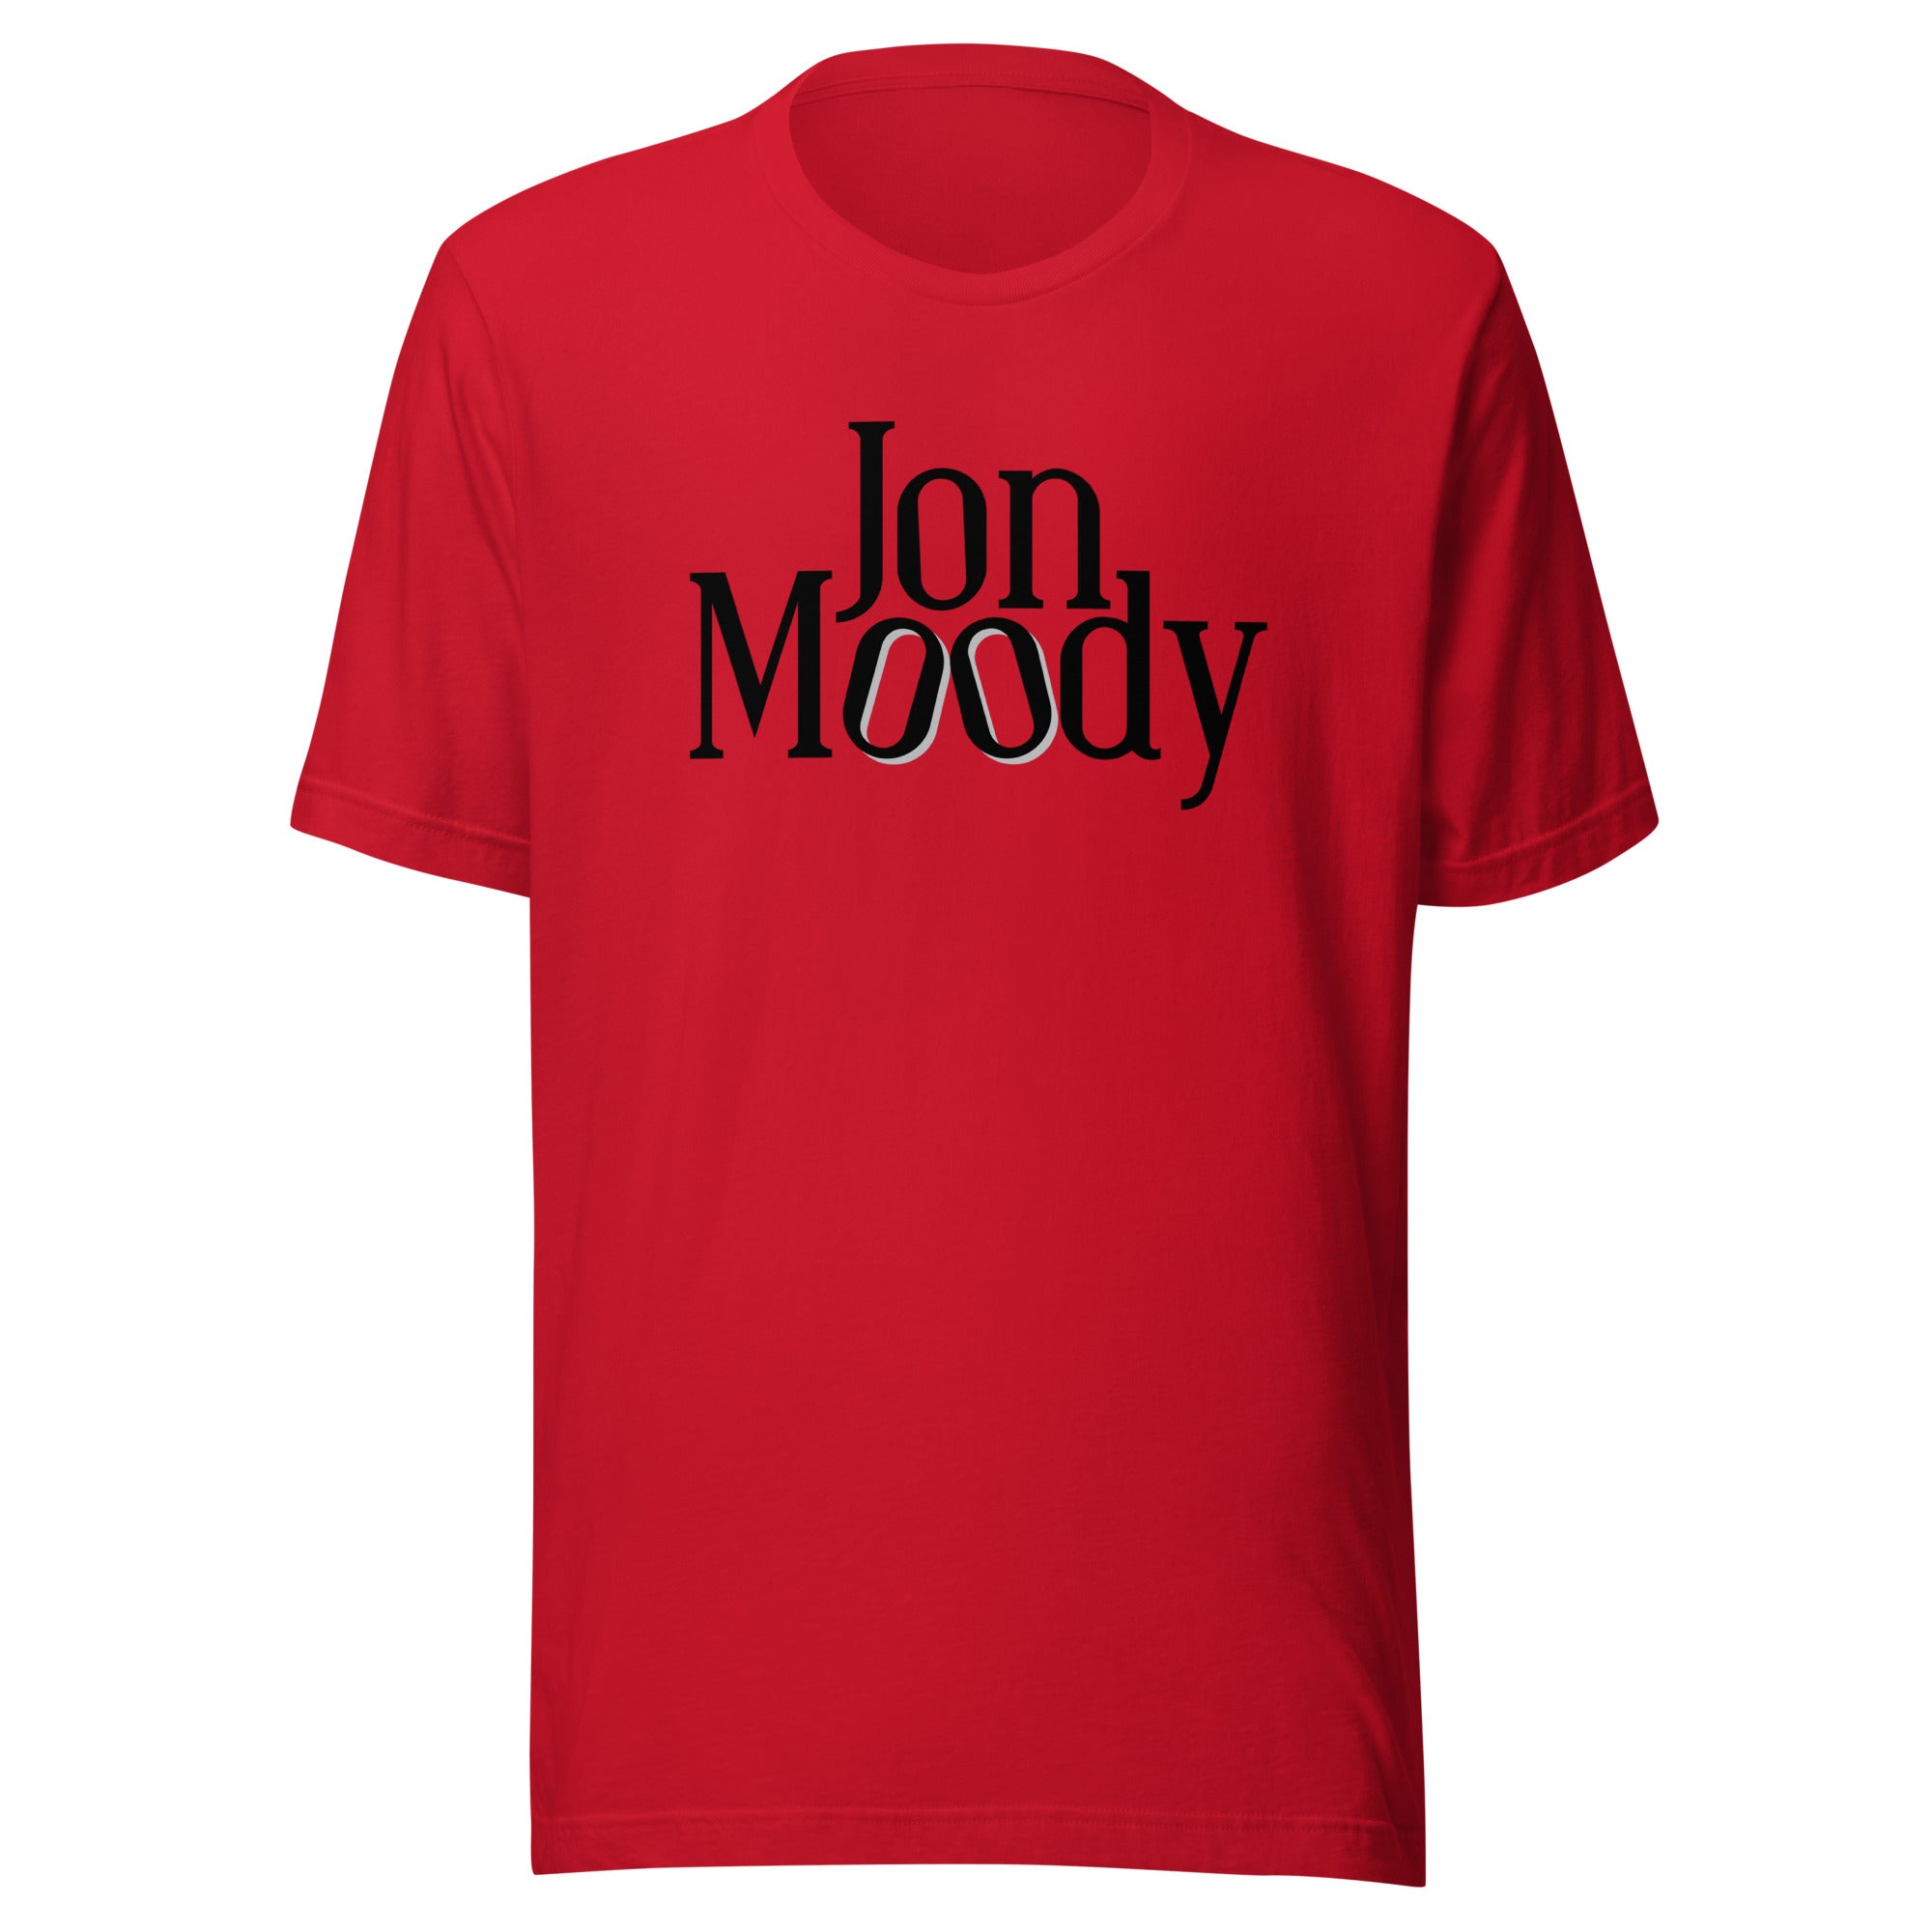 Jon Moody - Unisex t-shirt